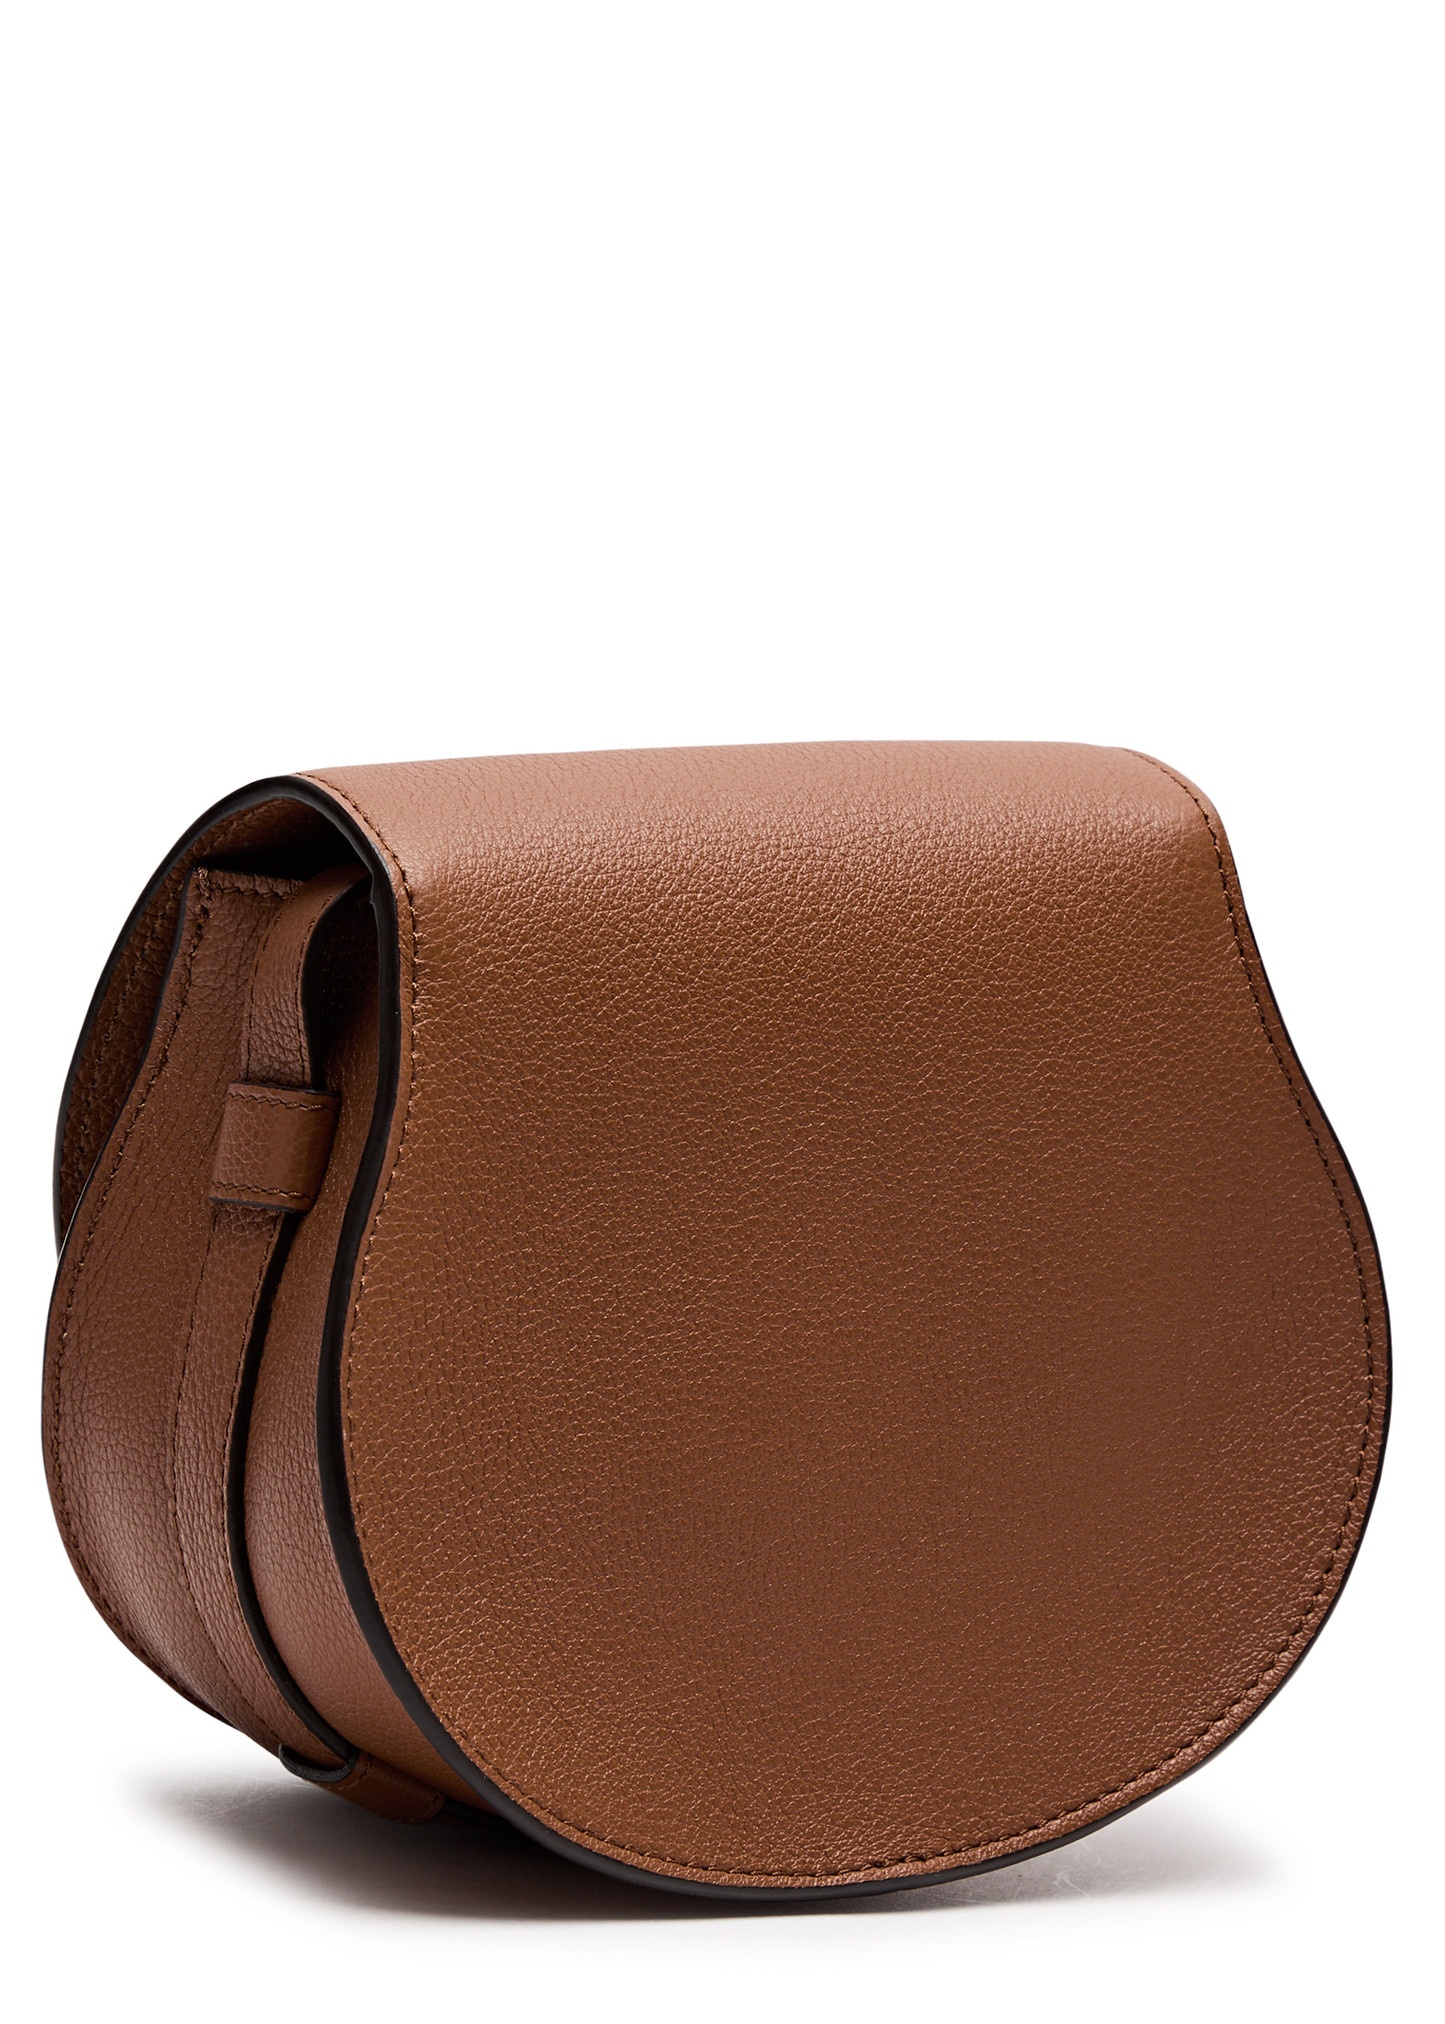 Marcie small leather saddle bag - 2